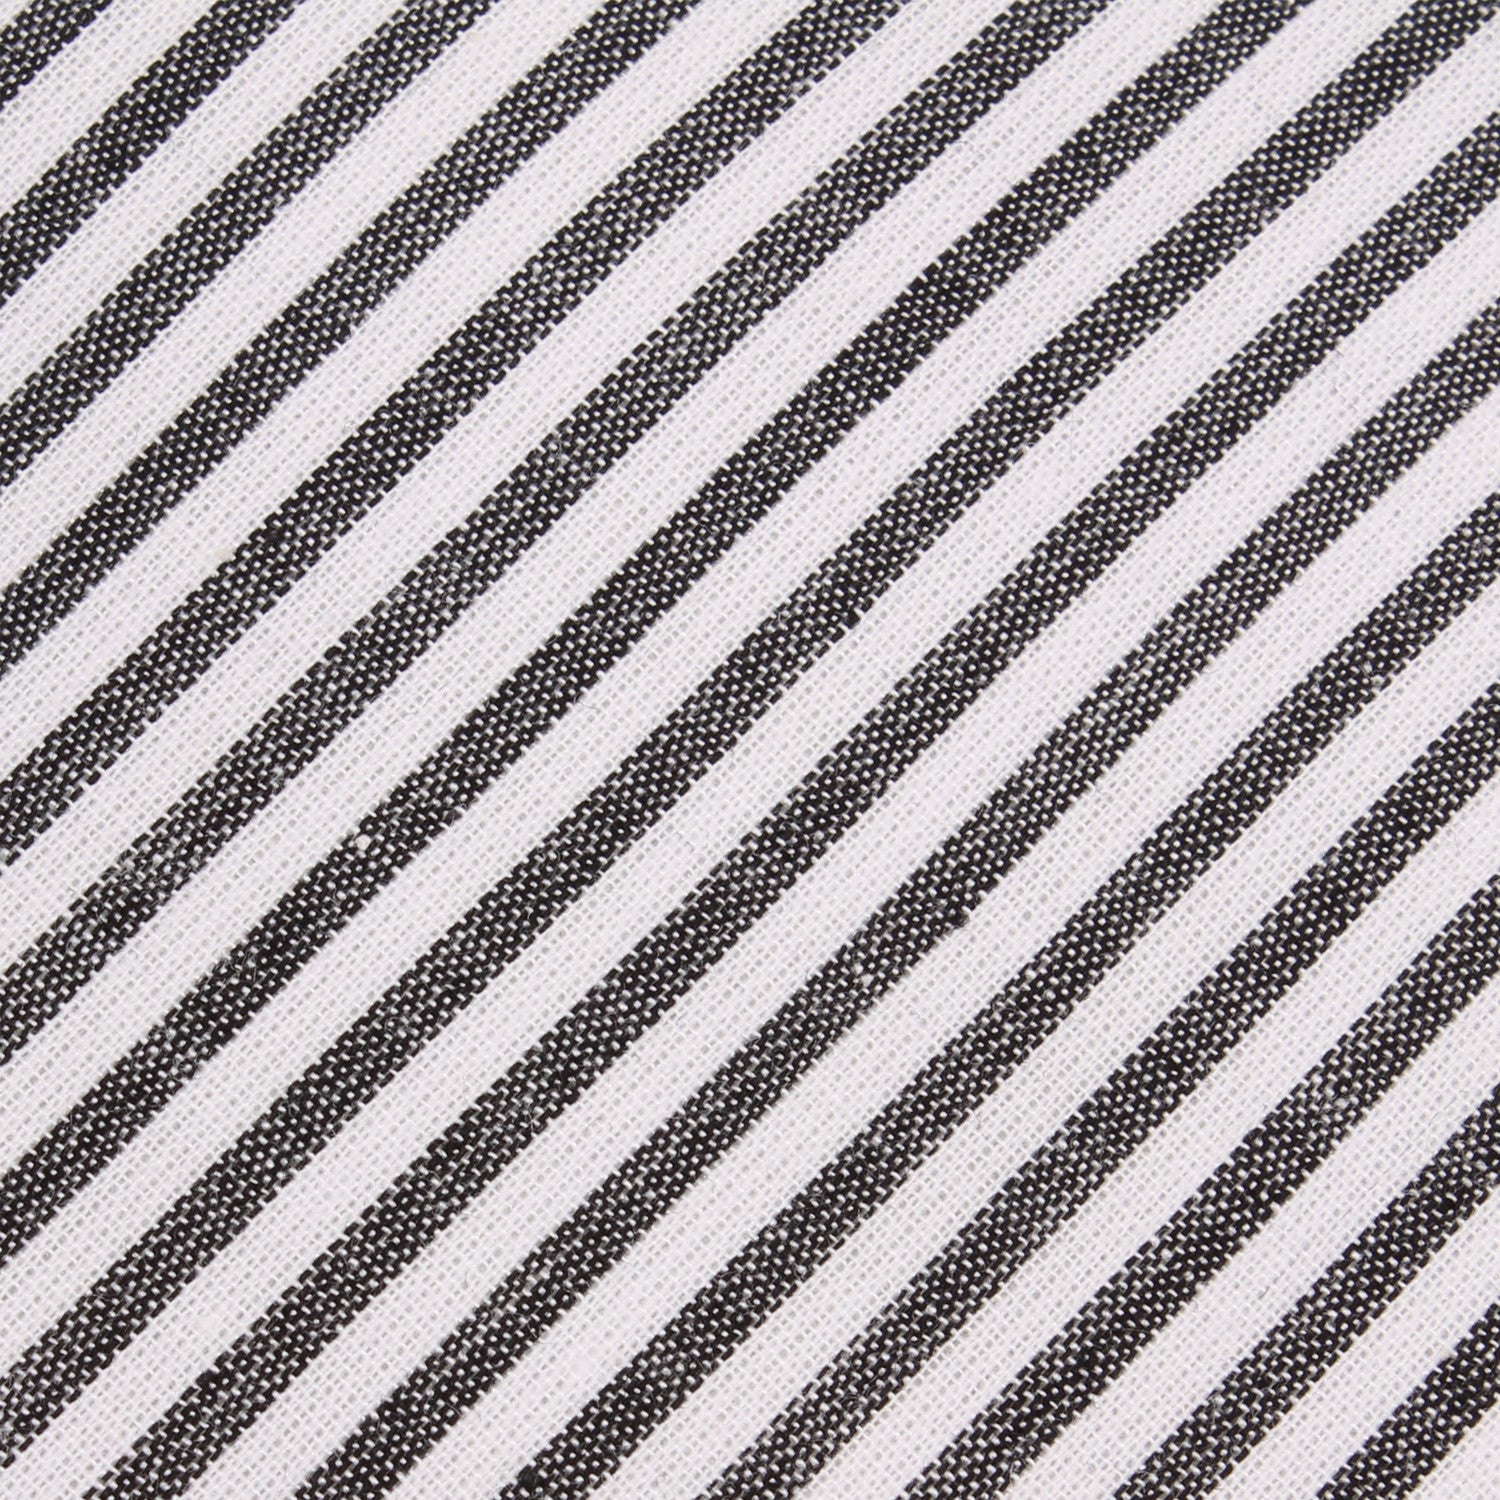 Black and White Chalk Stripes Cotton Fabric Self Tie Bow Tie C003